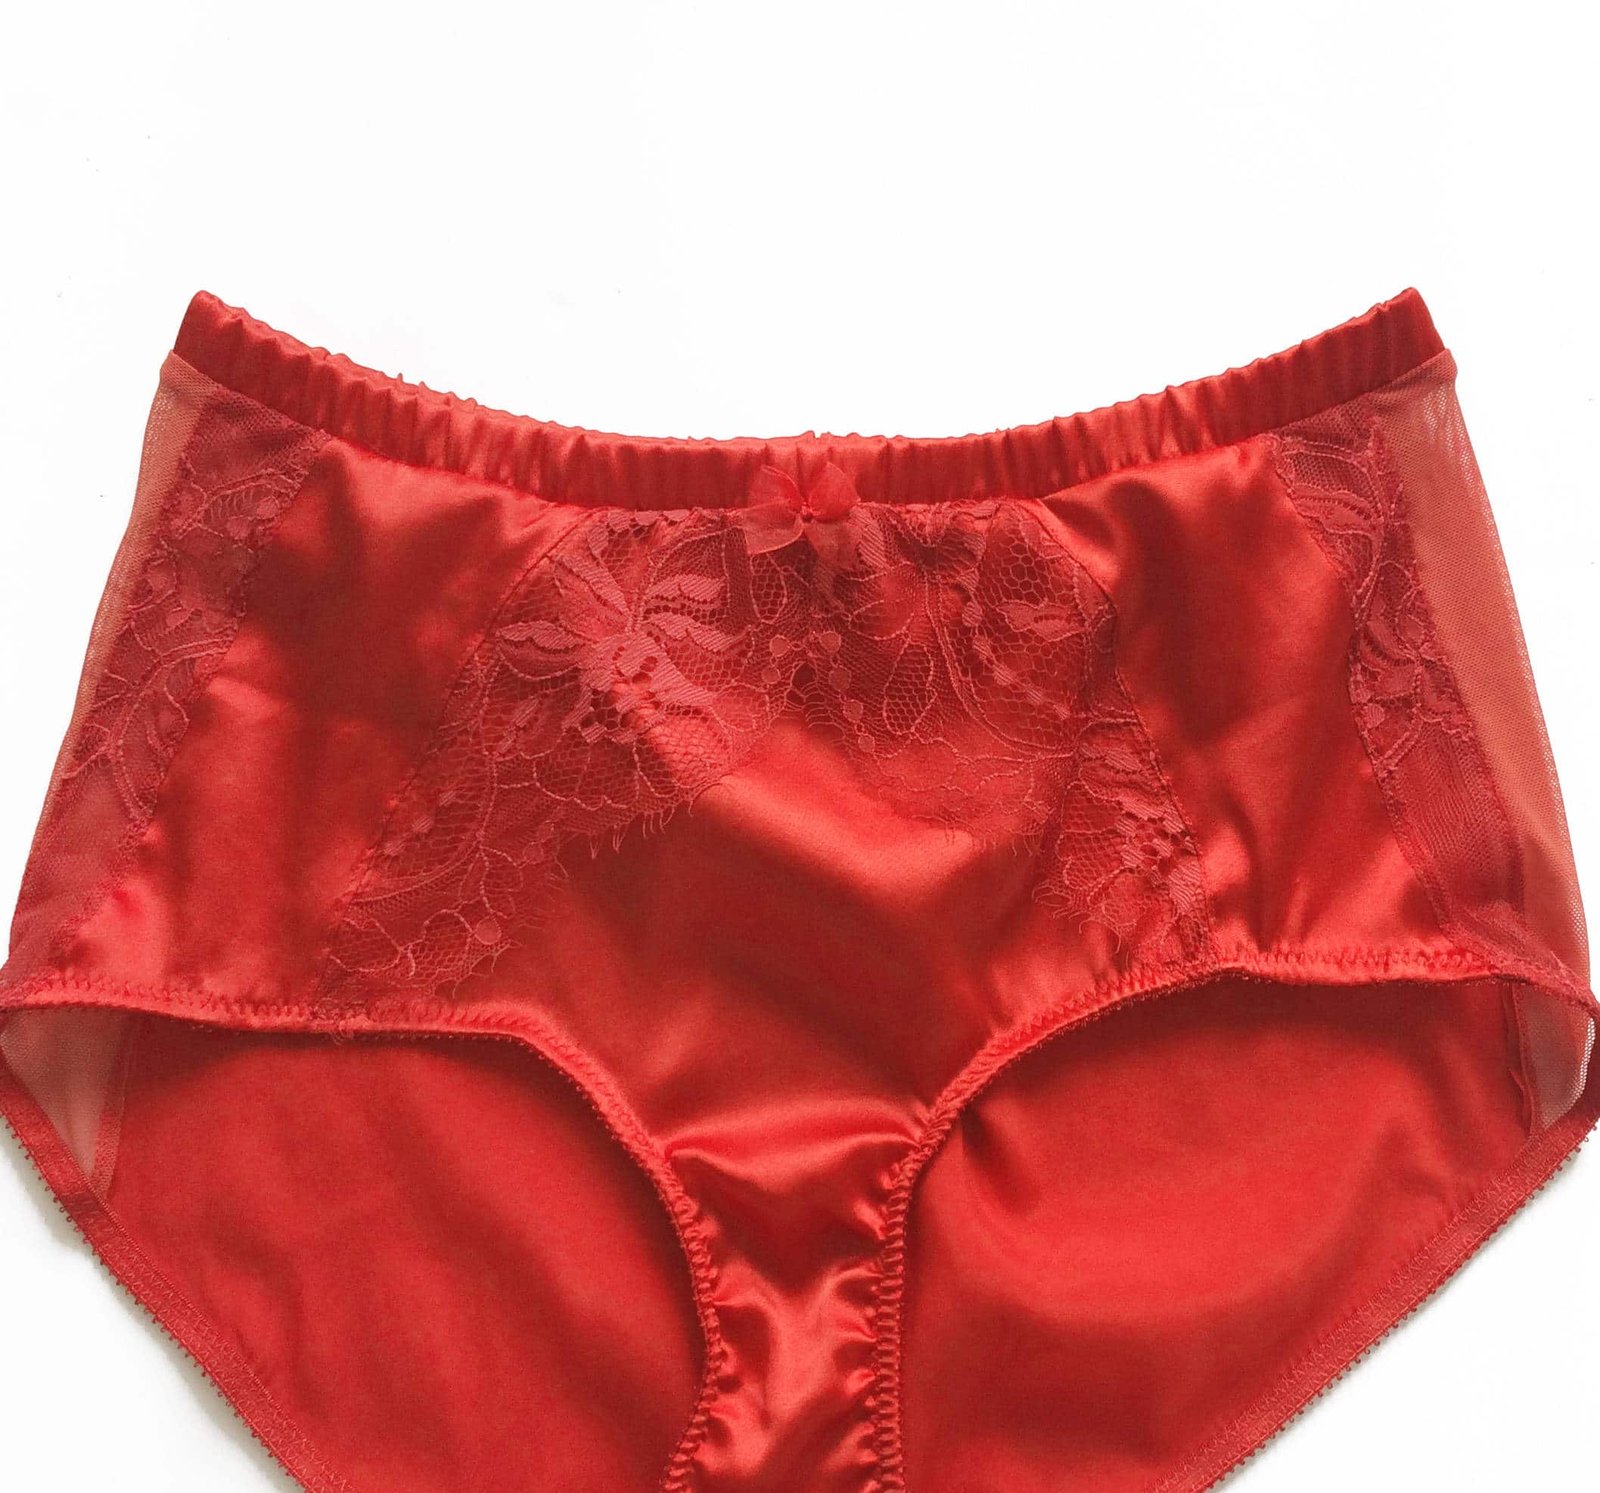 Women's Panties Online - A Guide to Buying Silky Panties